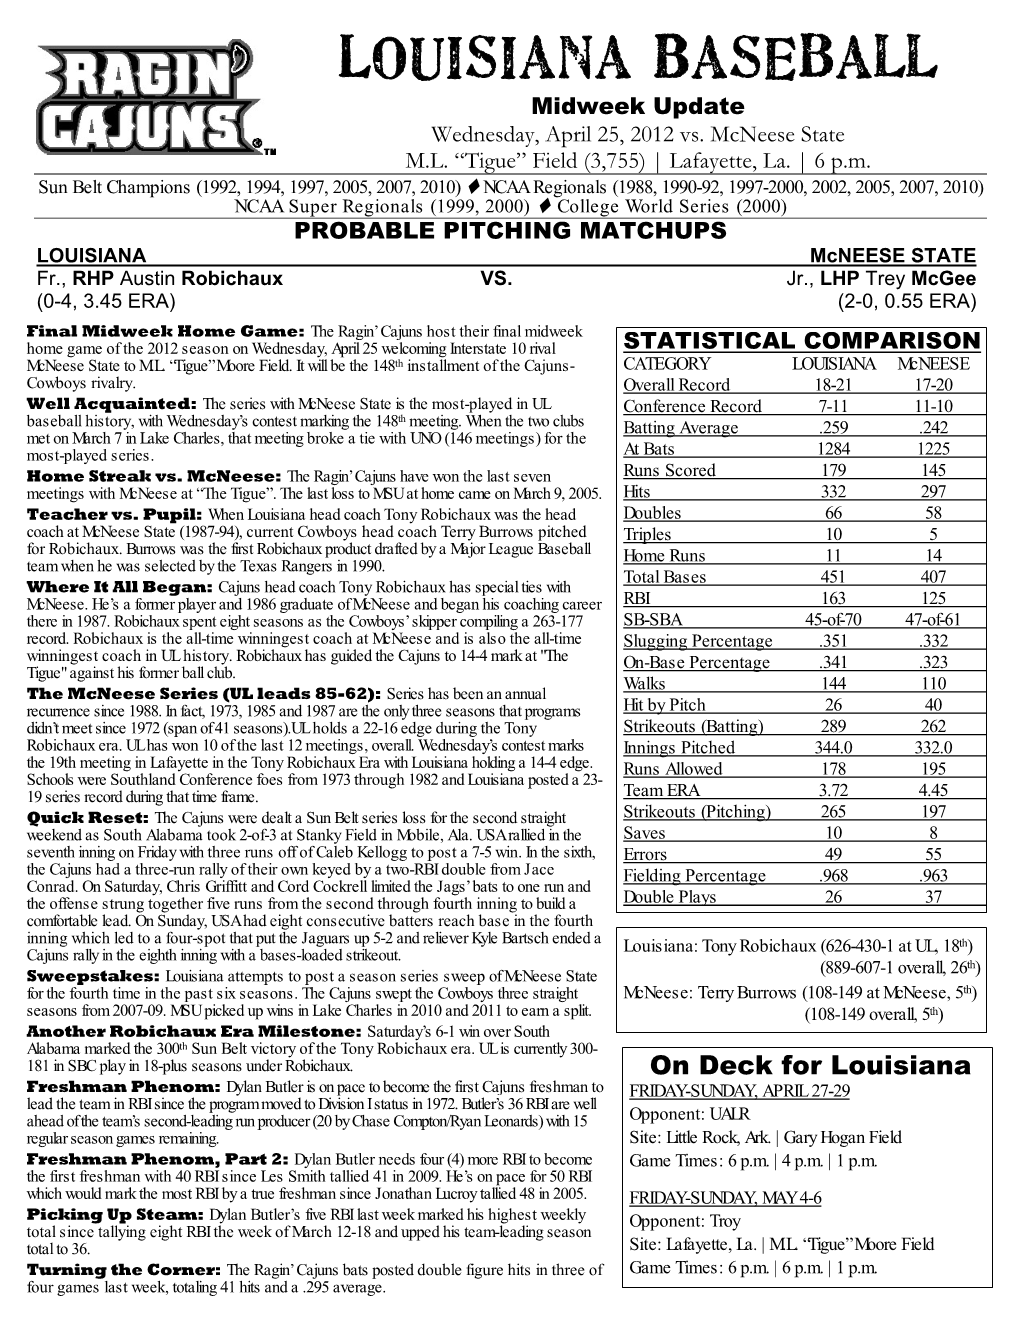 Louisiana Baseball Midweek Update Wednesday, April 25, 2012 Vs